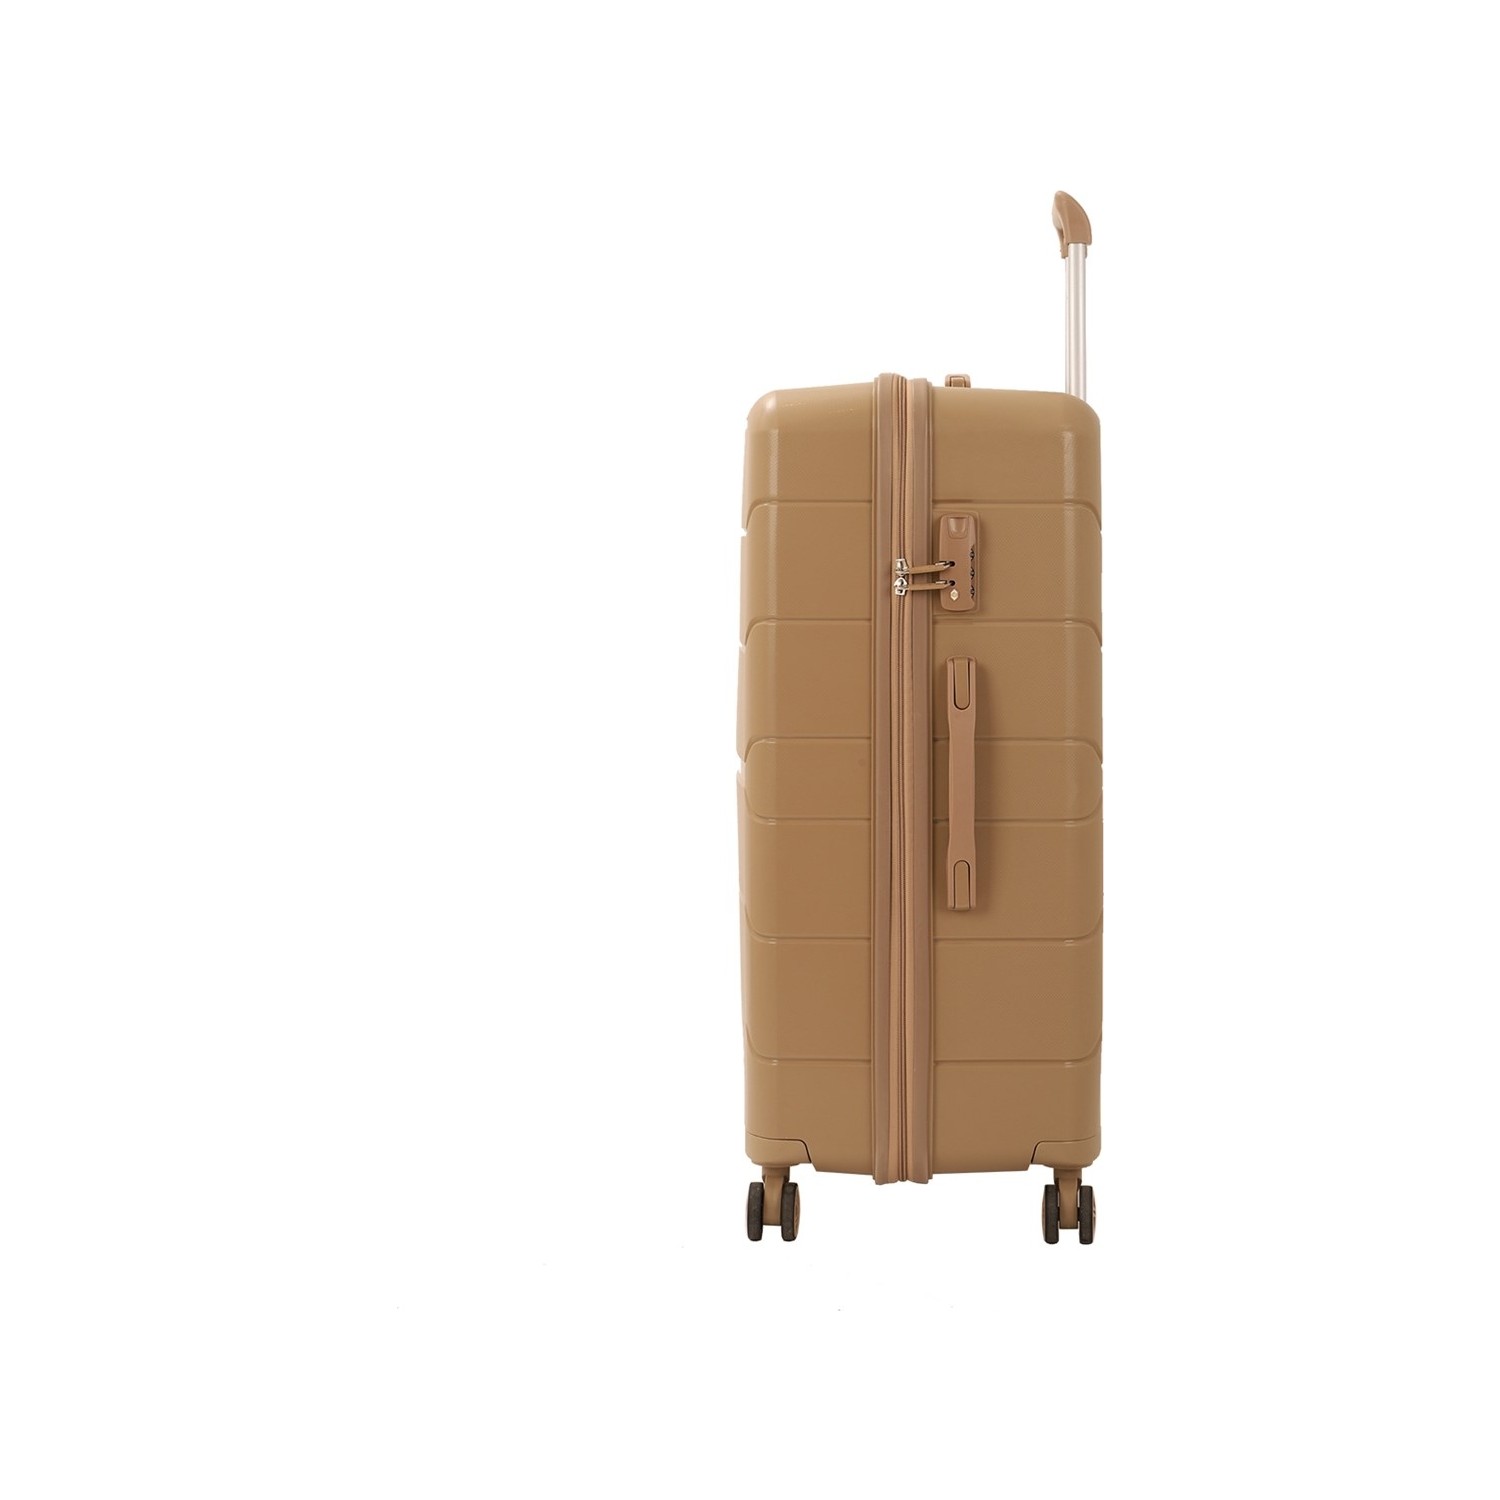 Средний чемодан из полипропилена MCS V366 M CHAMPAGE! Для 18 кг! - 3